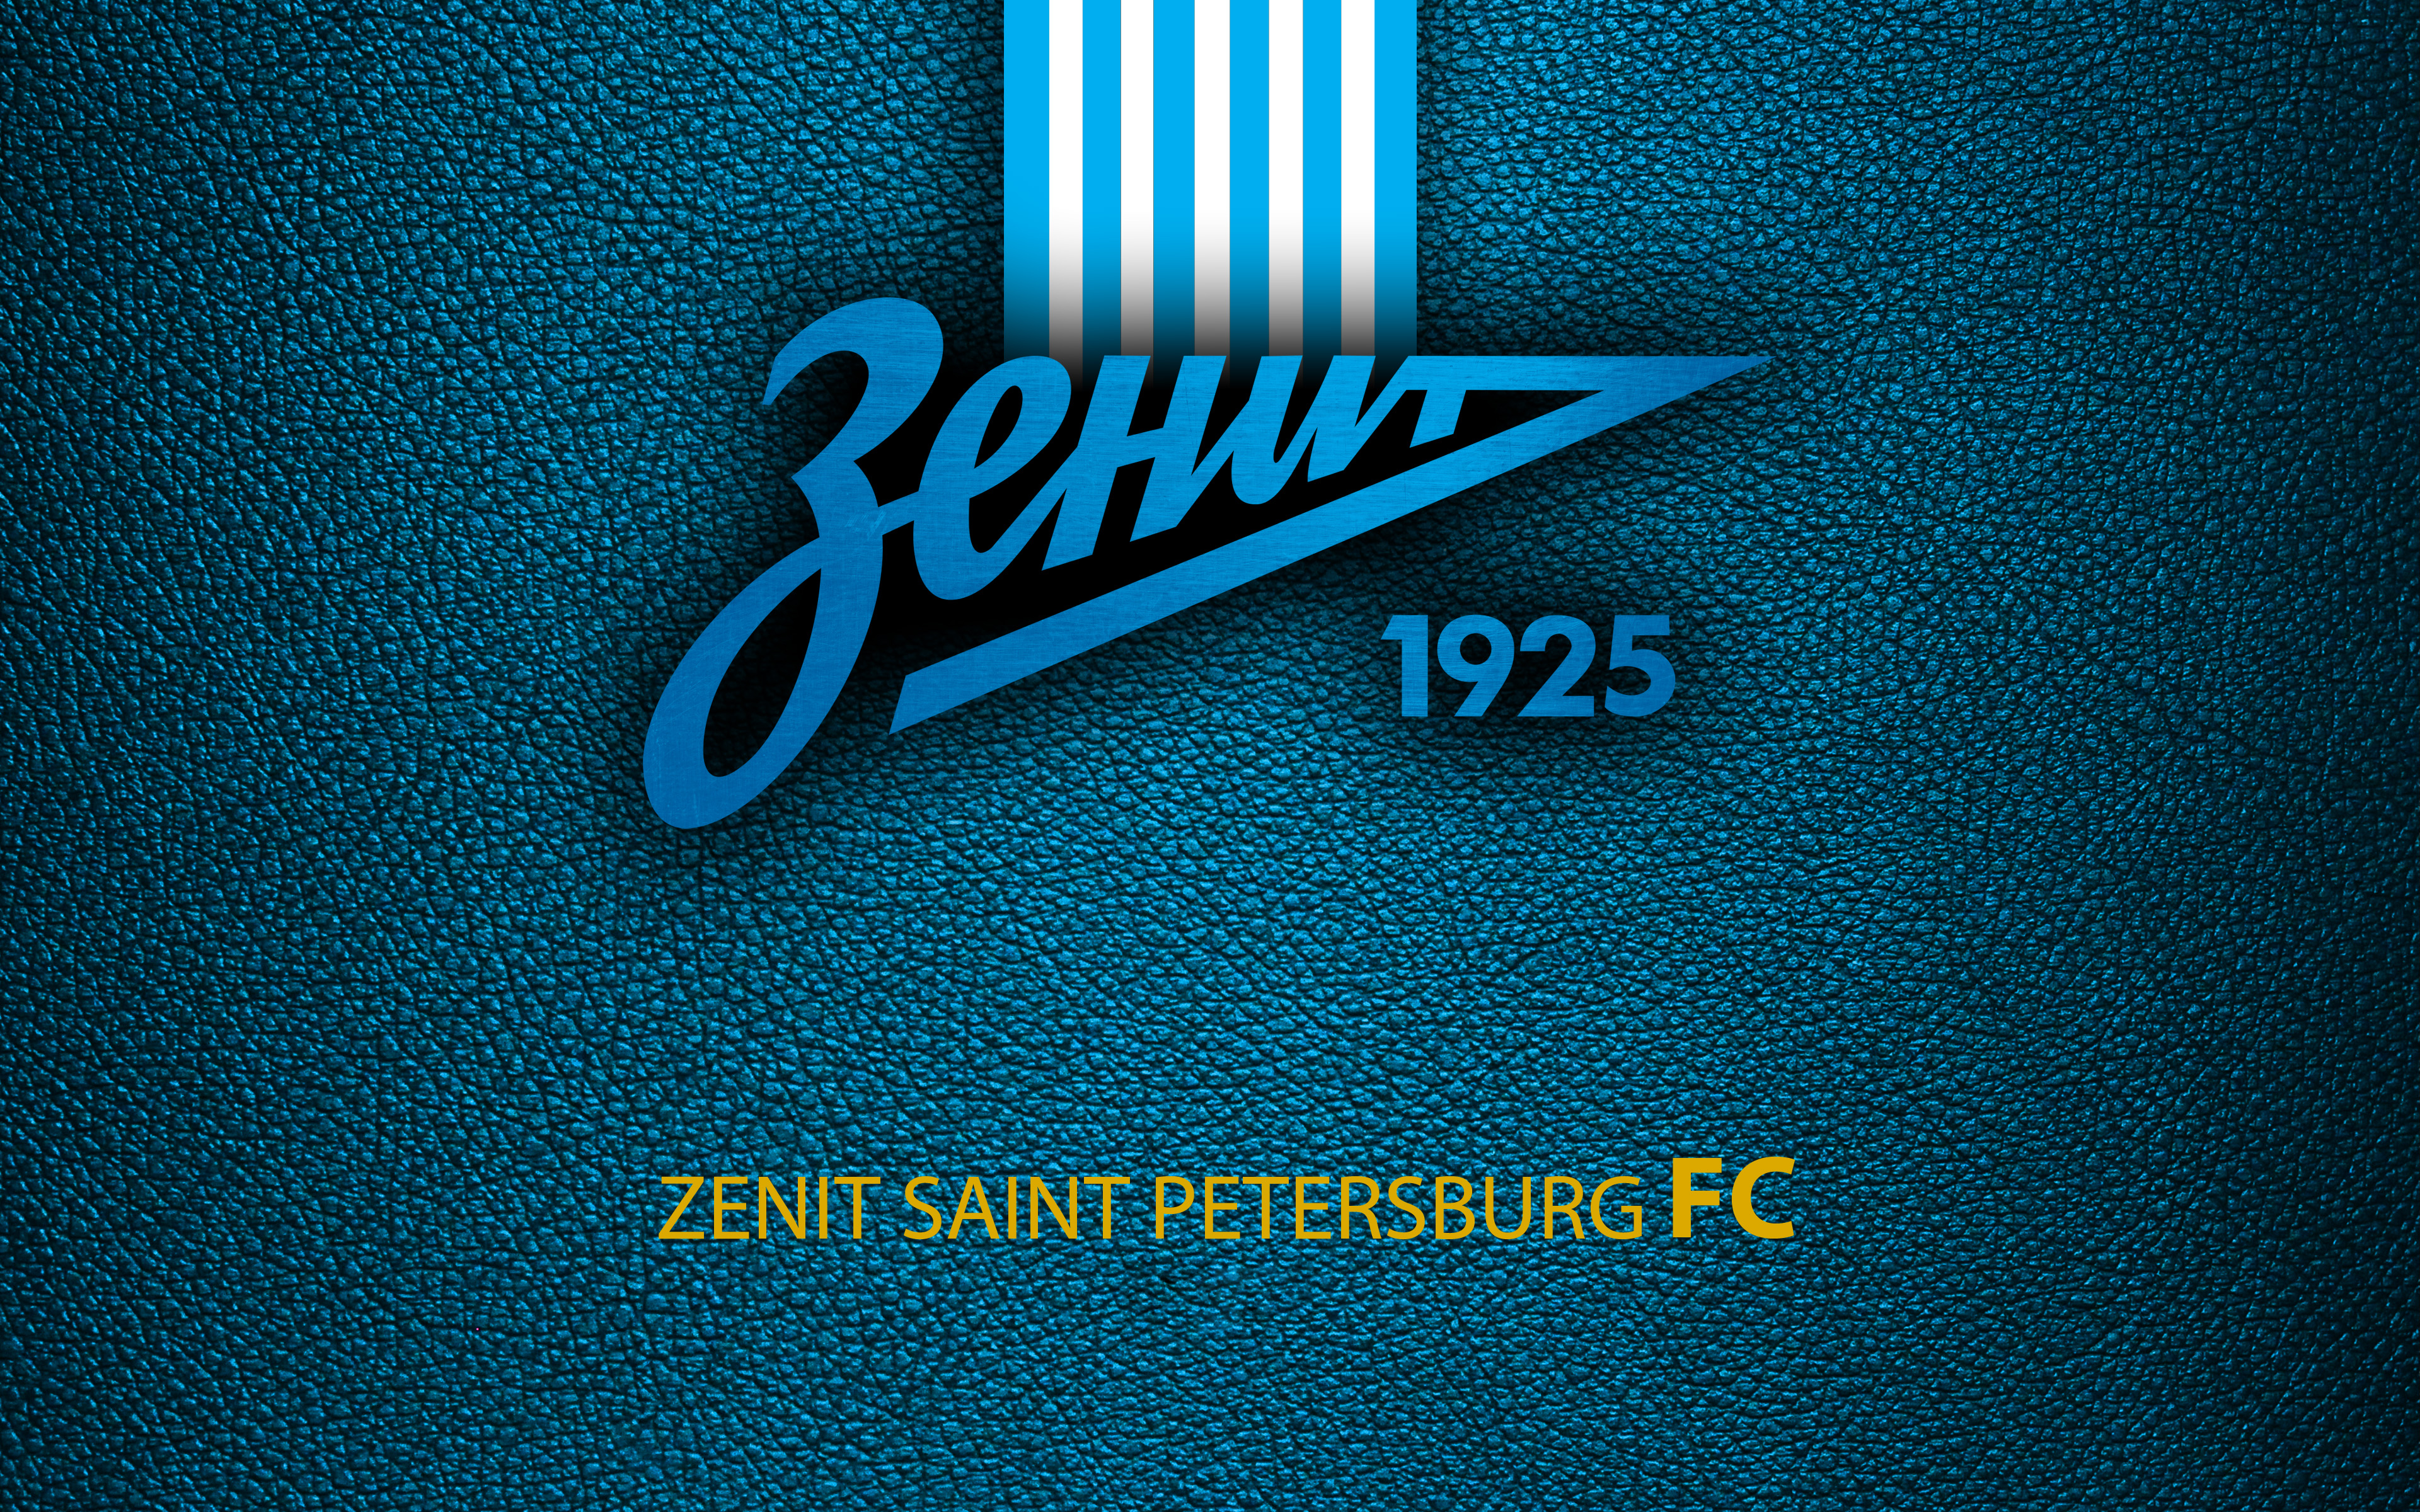 fc zenit saint petersburg, sports, emblem, logo, soccer Full HD